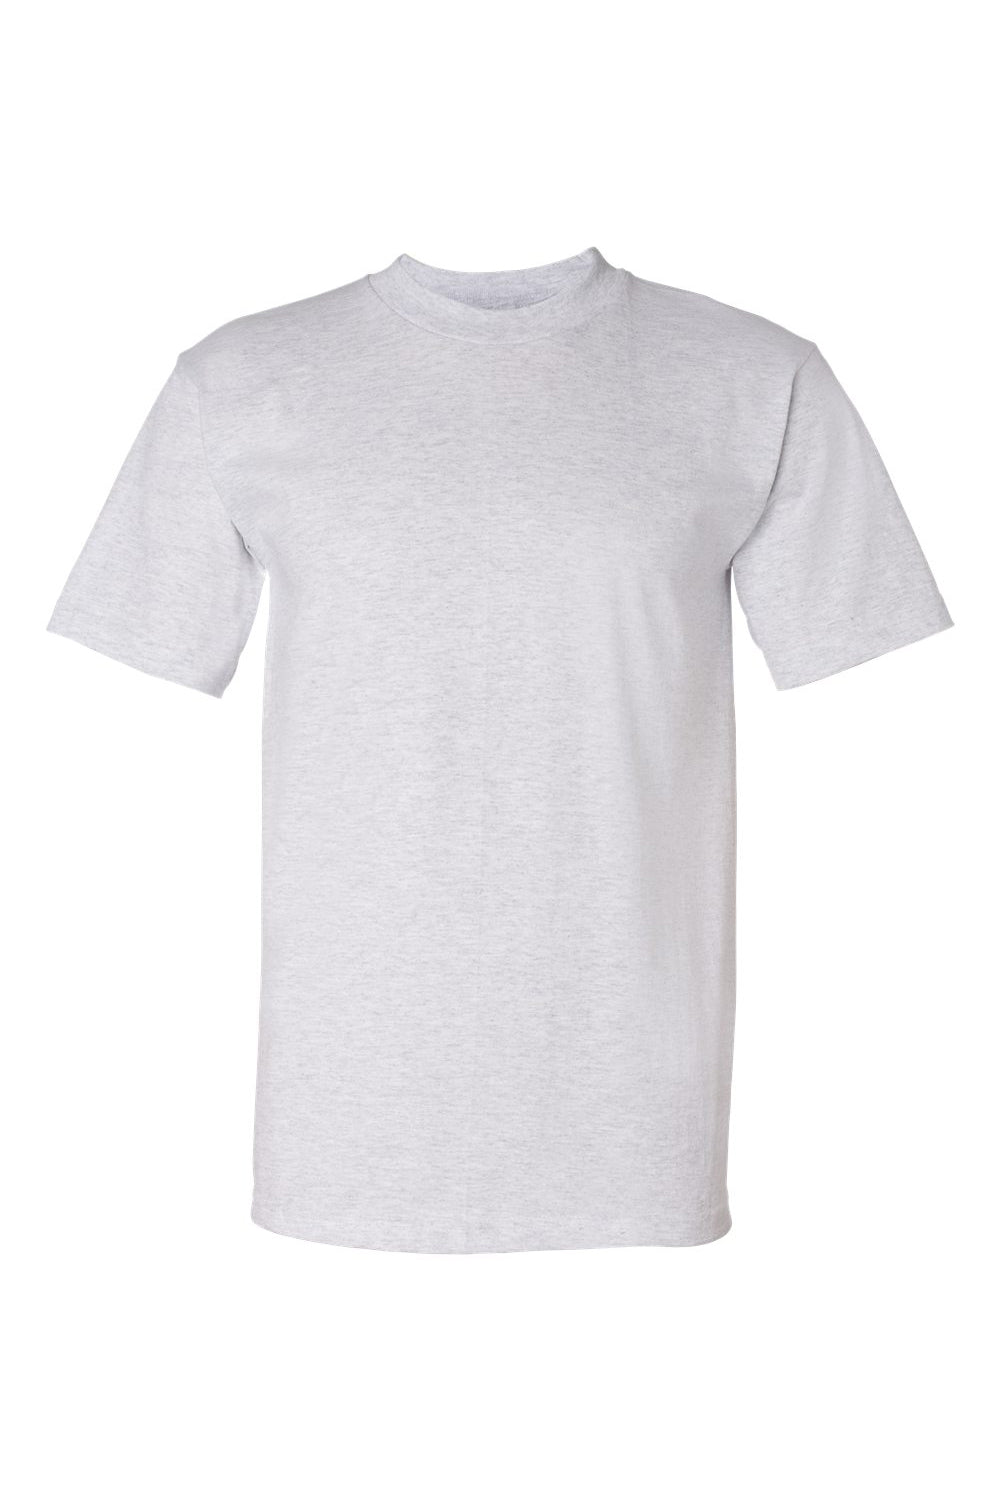 Bayside BA5100 Mens USA Made Short Sleeve Crewneck T-Shirt Ash Grey Flat Front